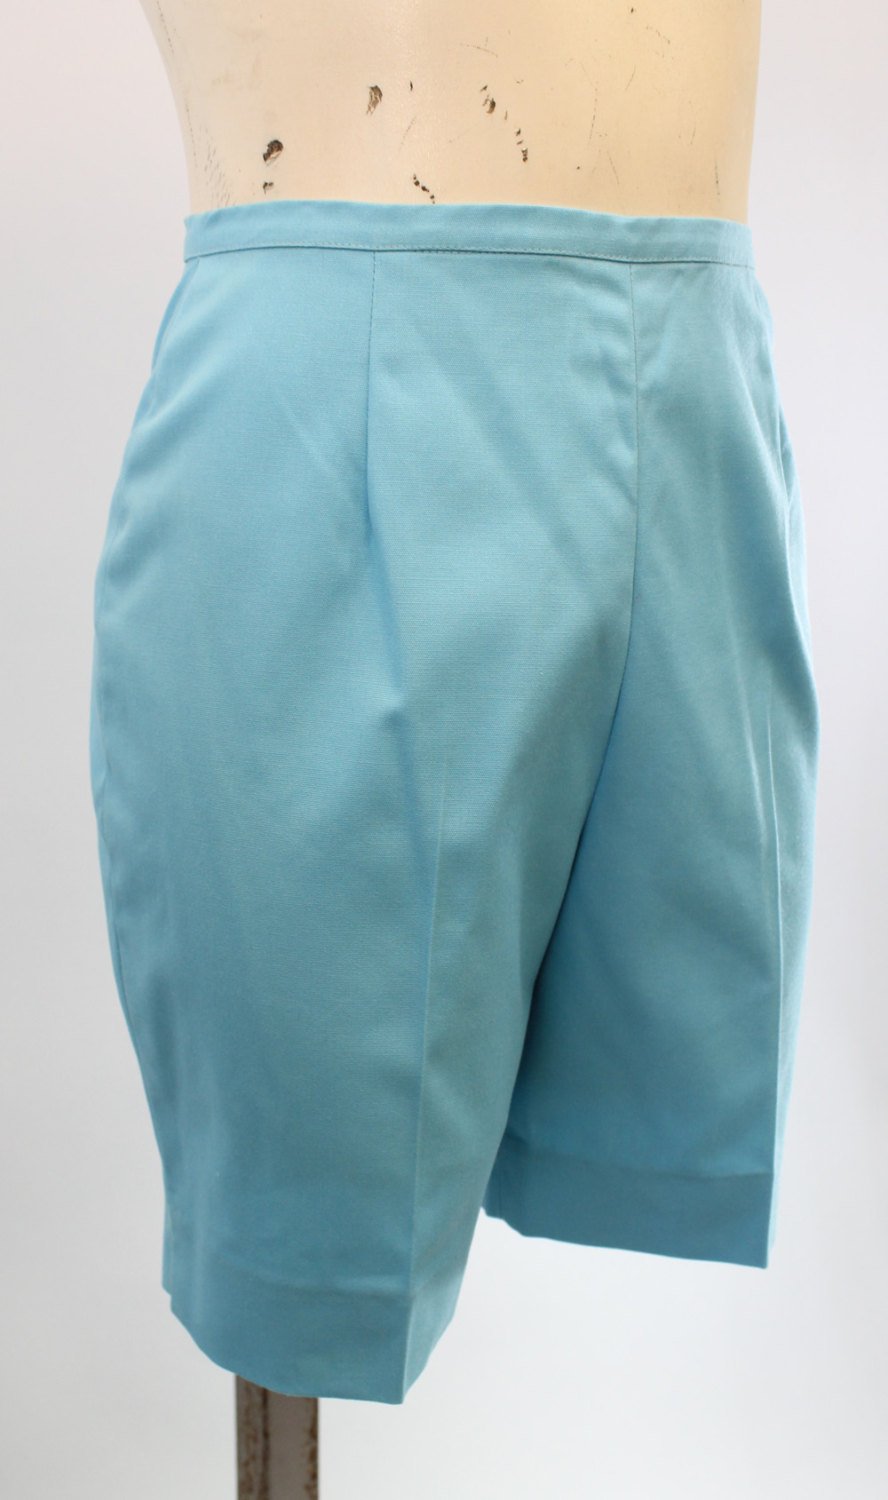 1960s cotton shorts small | vintage high waist shorts